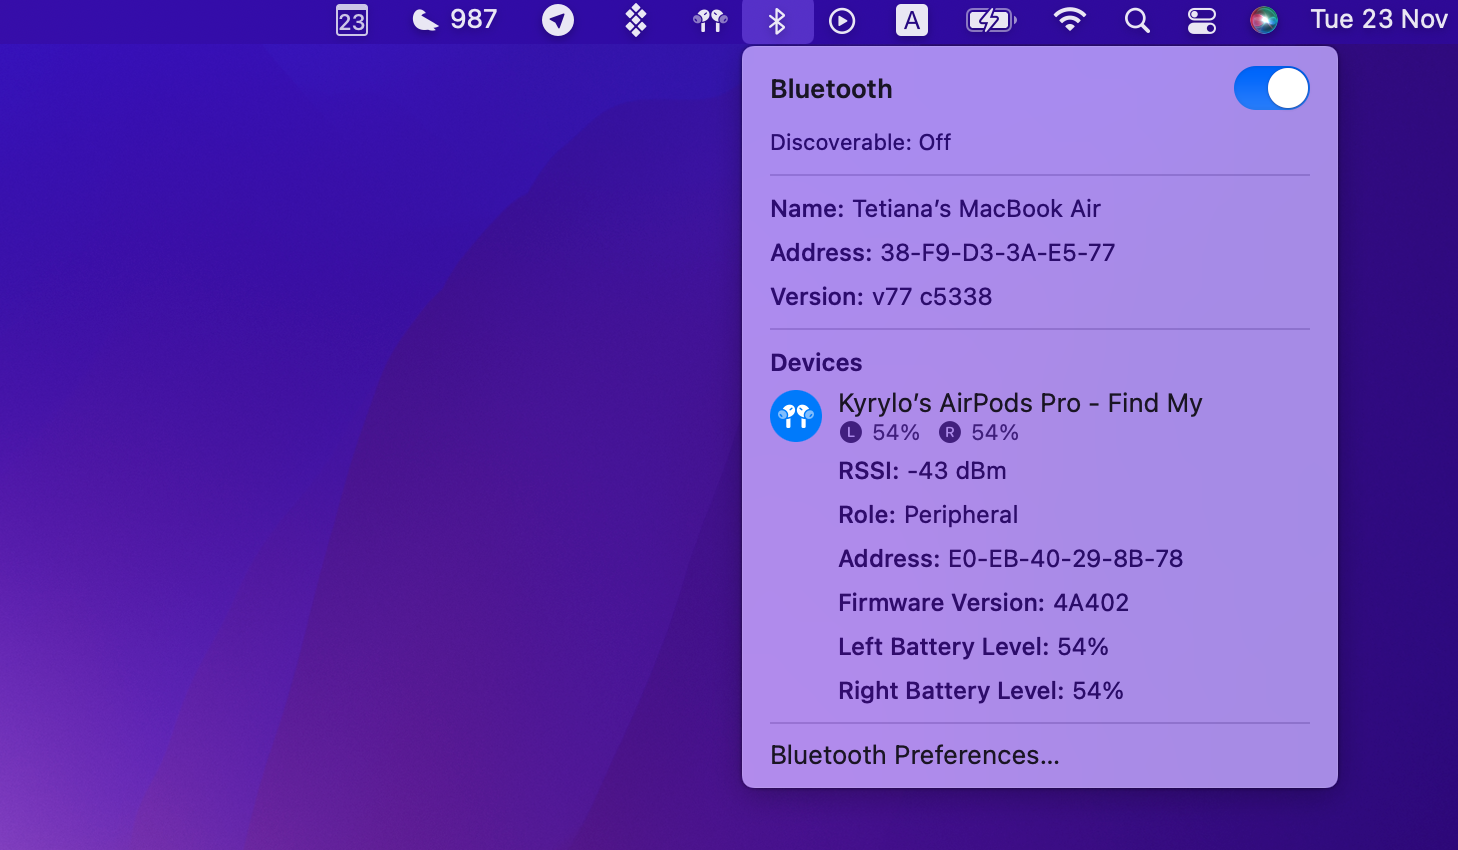 Bluetooth preferences in menu bar